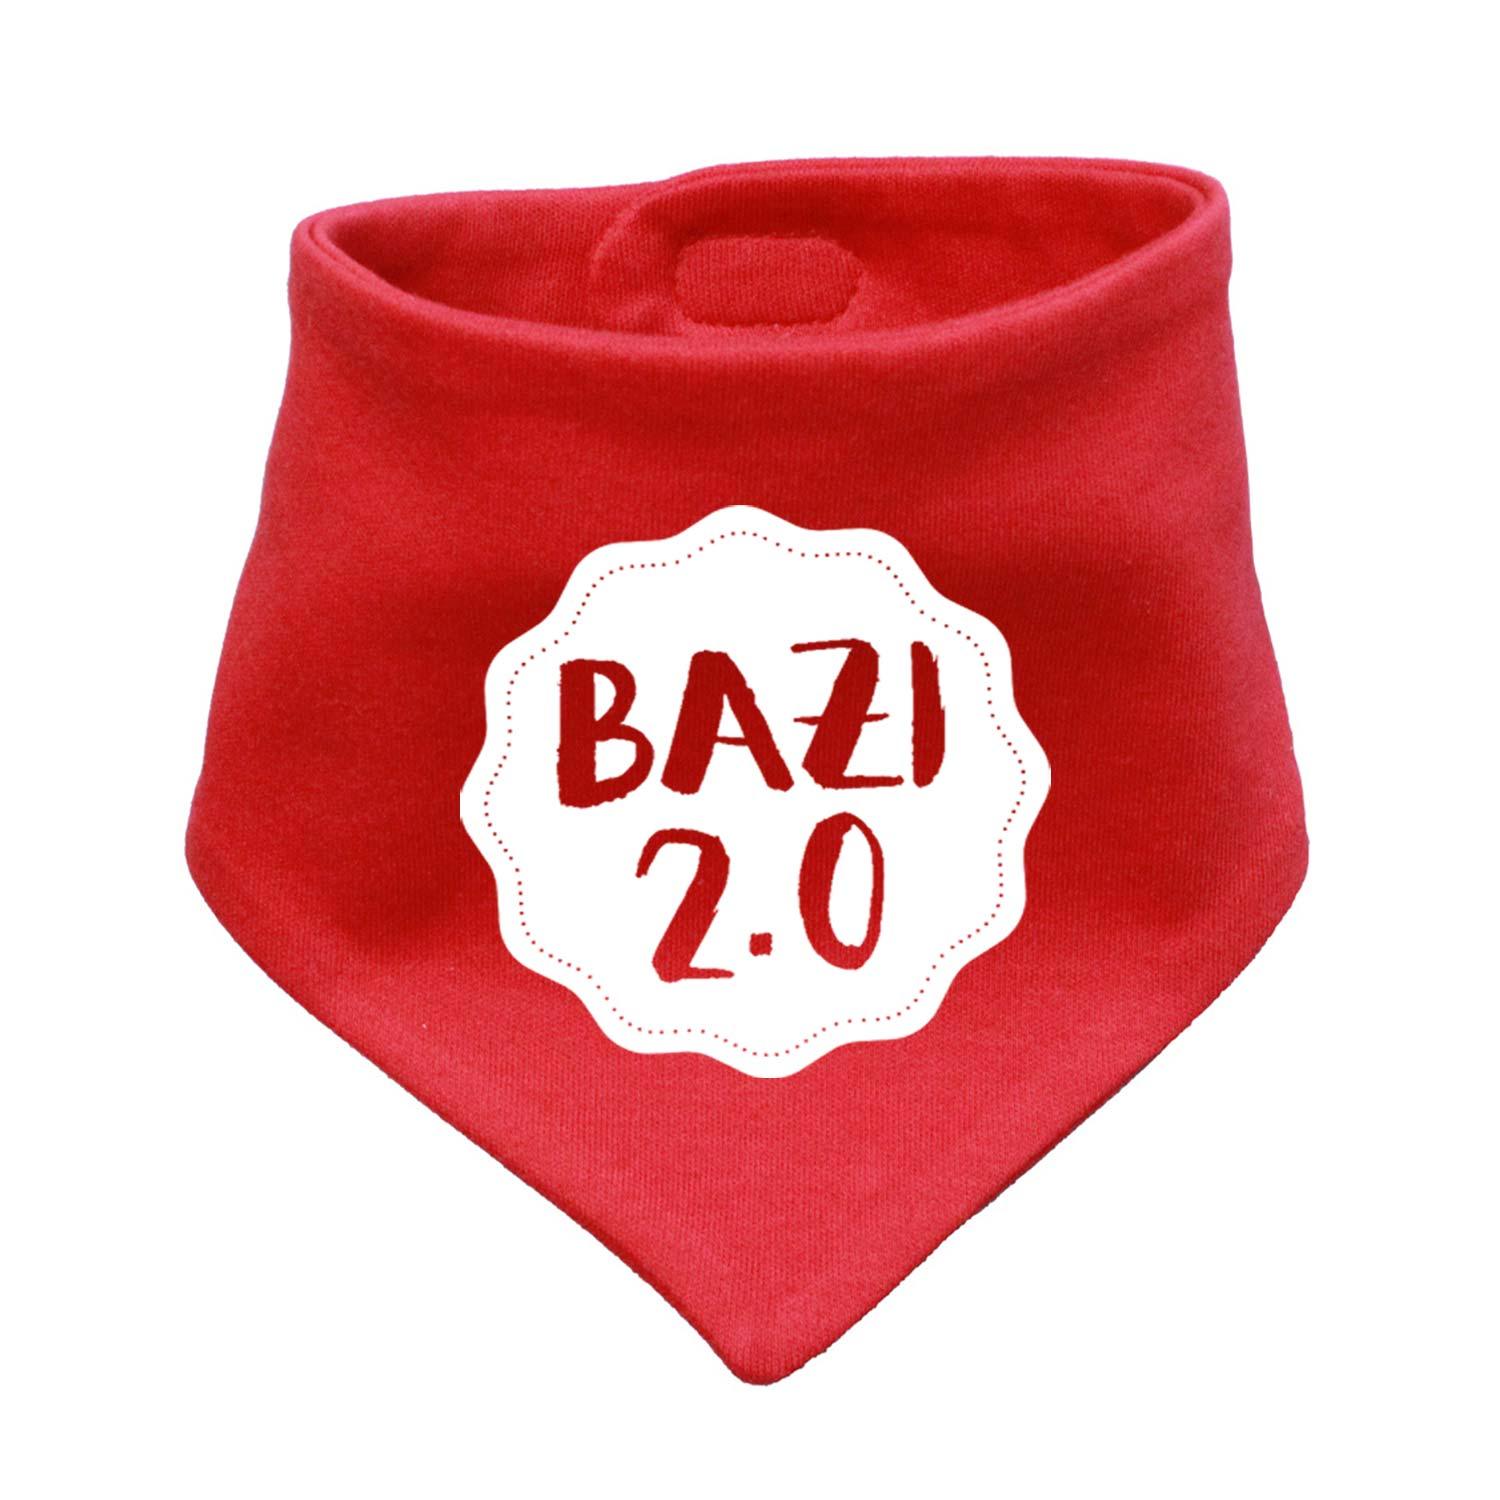 Babyhalstuch "Bazi 2.0" - bavariashop - mei LebensGfui